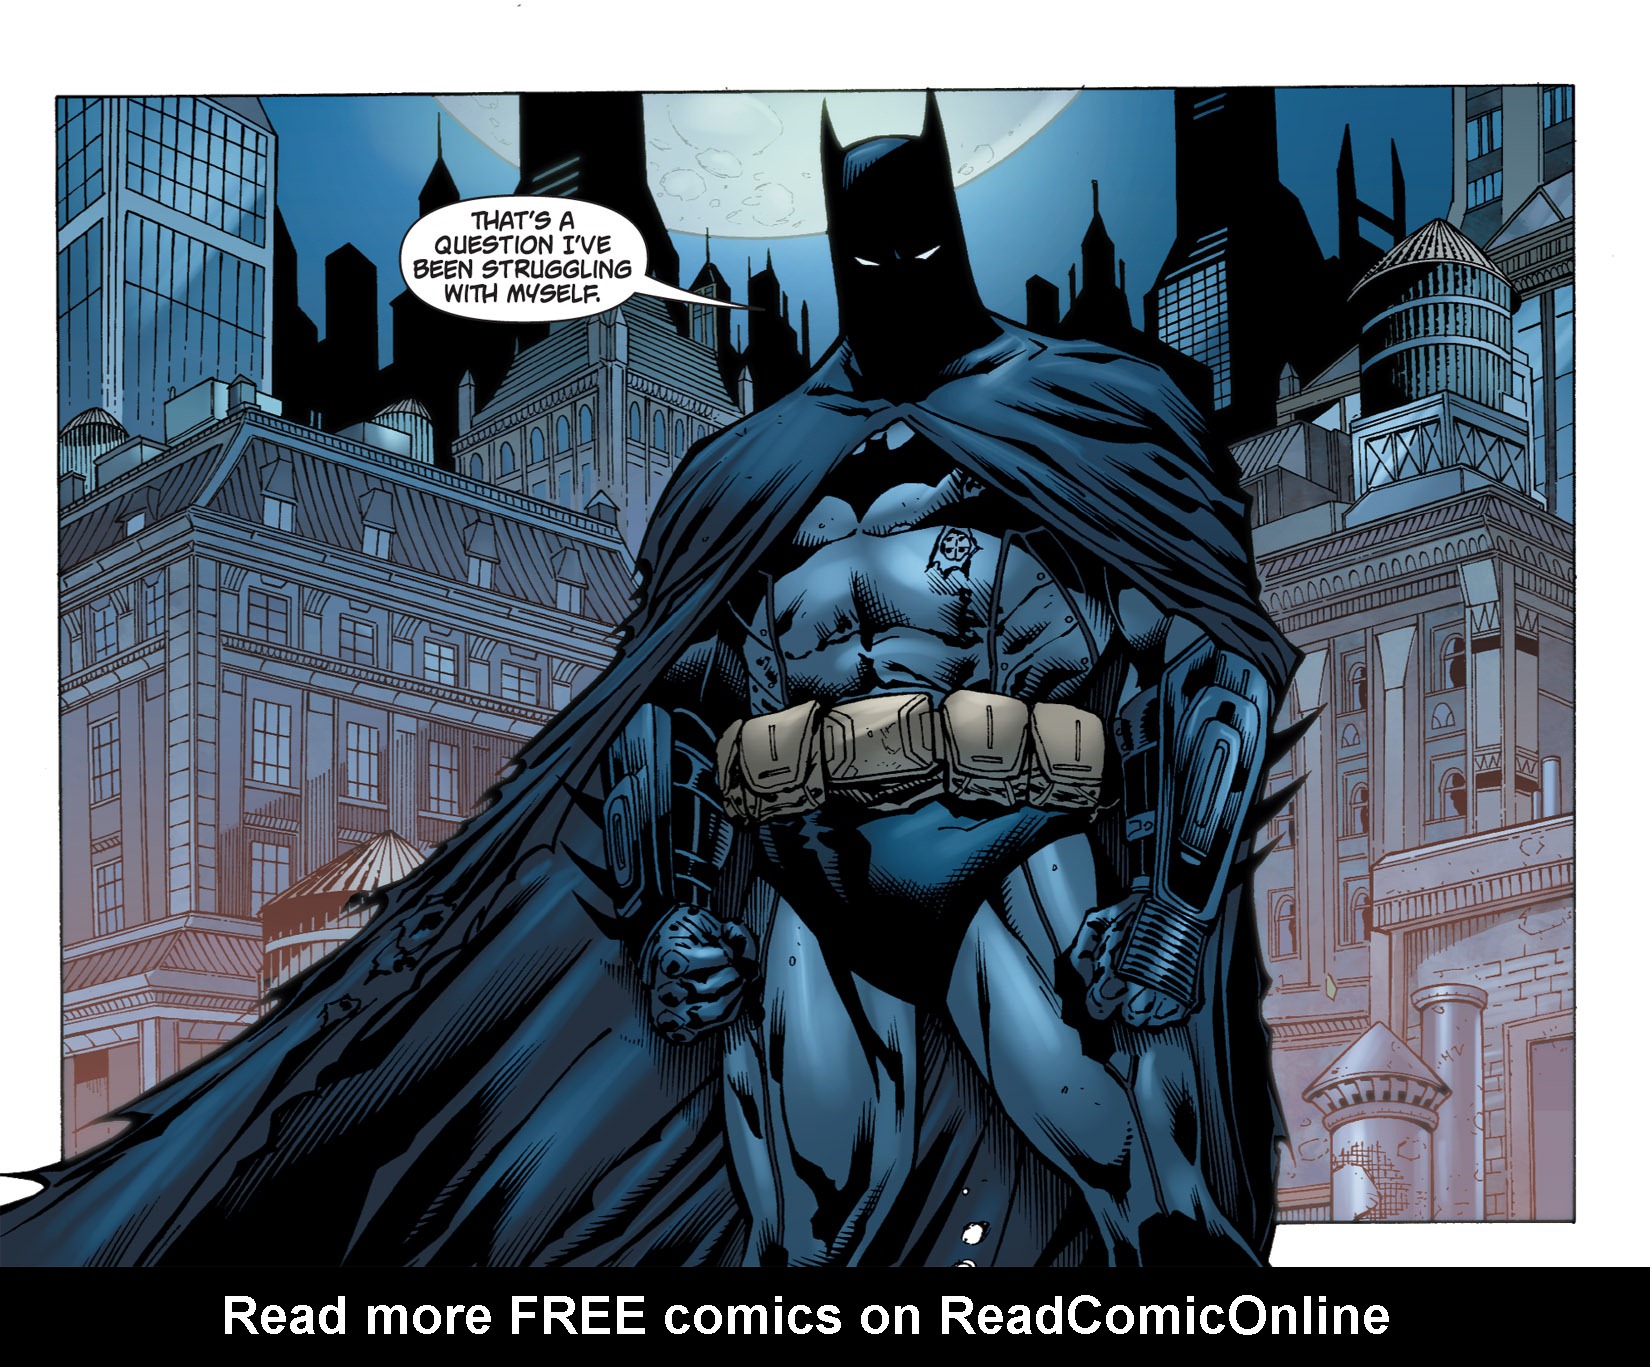 Бэтмен на английском языке. Бэтмен Аркхем комикс. Бэтмен из комиксов. Бэтмен страницы из комиксов. Комикс с Бэтменом.